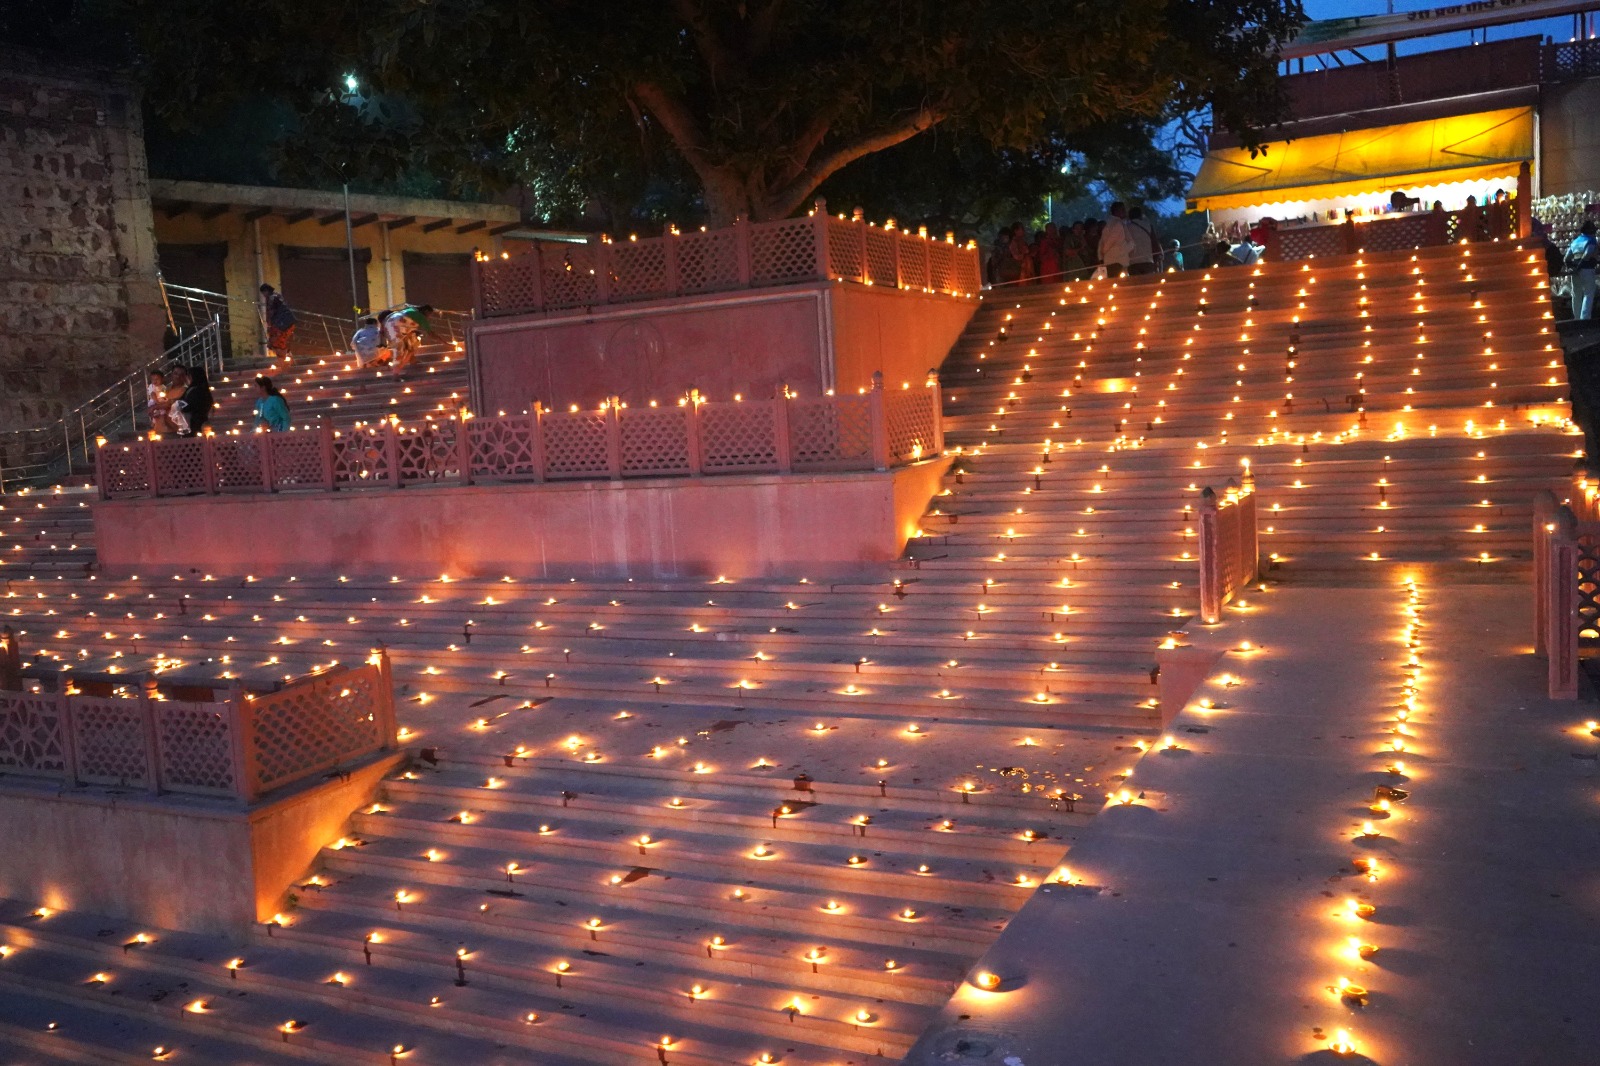 Diwali Mahotsab in Brahmbhanda Ghat